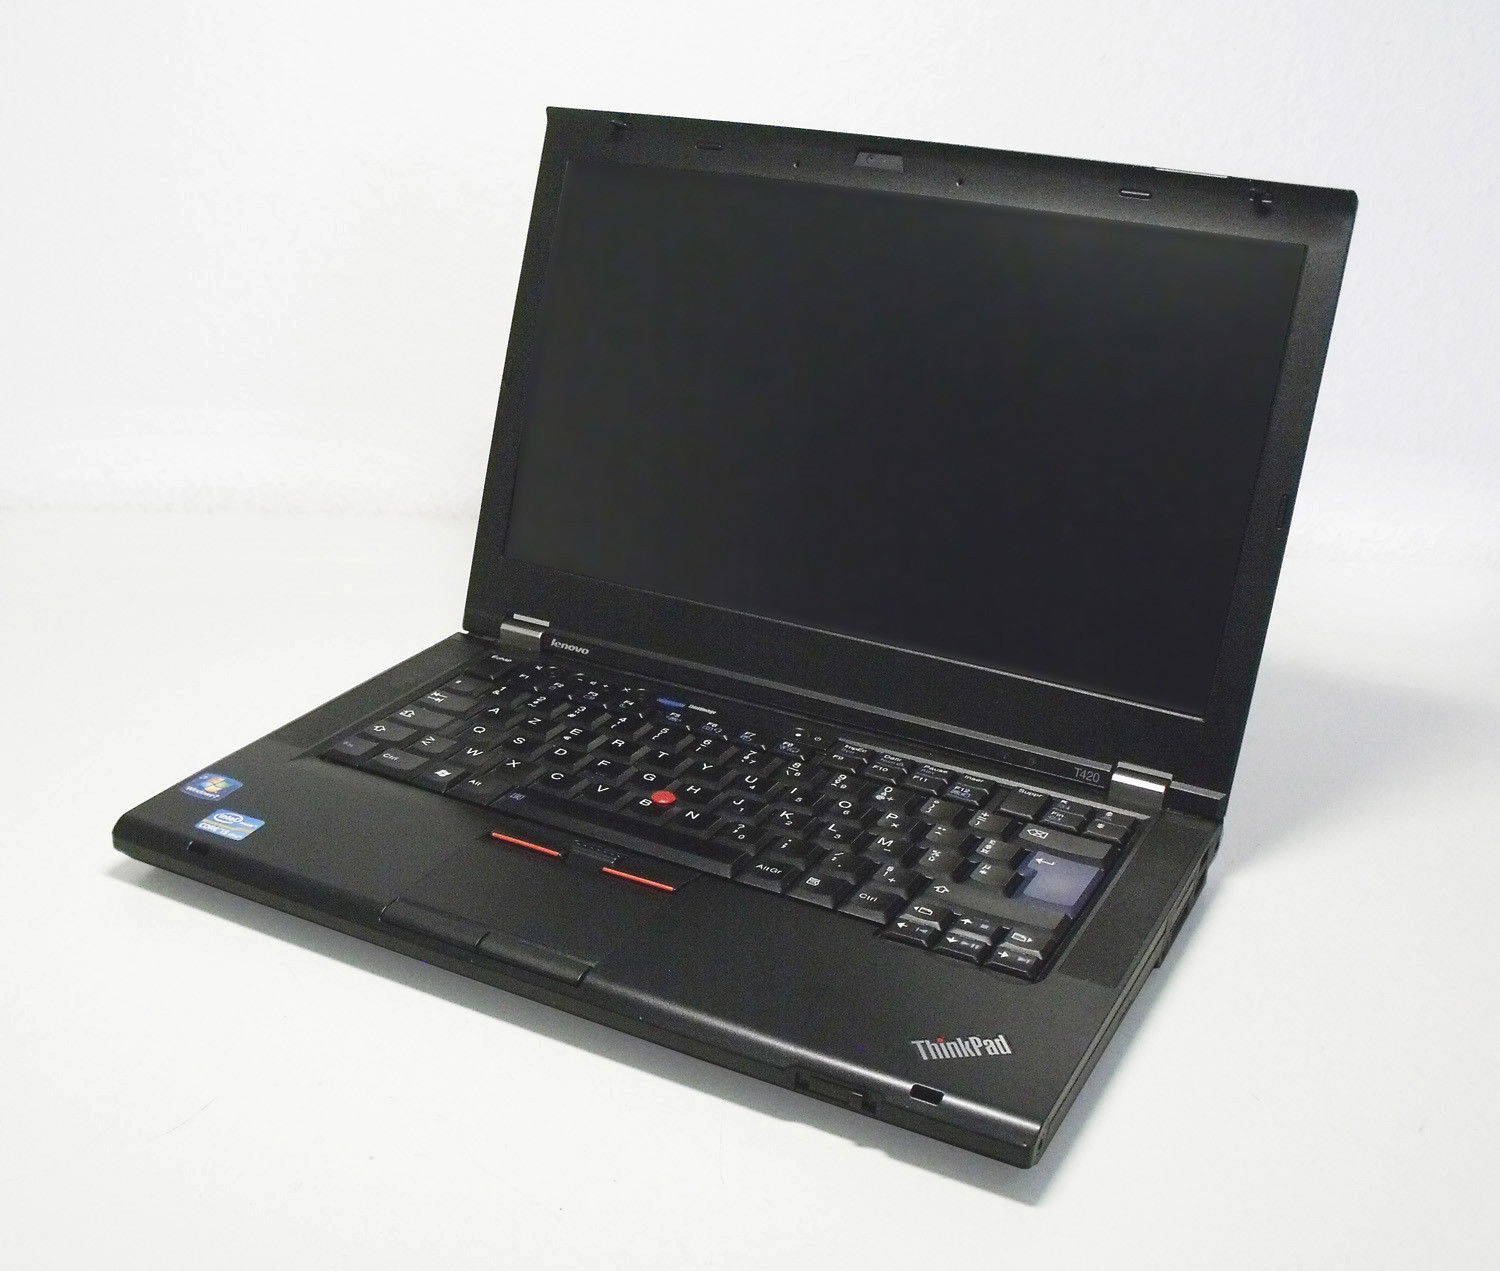 Lenovo ThinkPad T420 Core i5 2,6 GHz, 4 GB RAM, 320 GB HDD, Win 7, 14